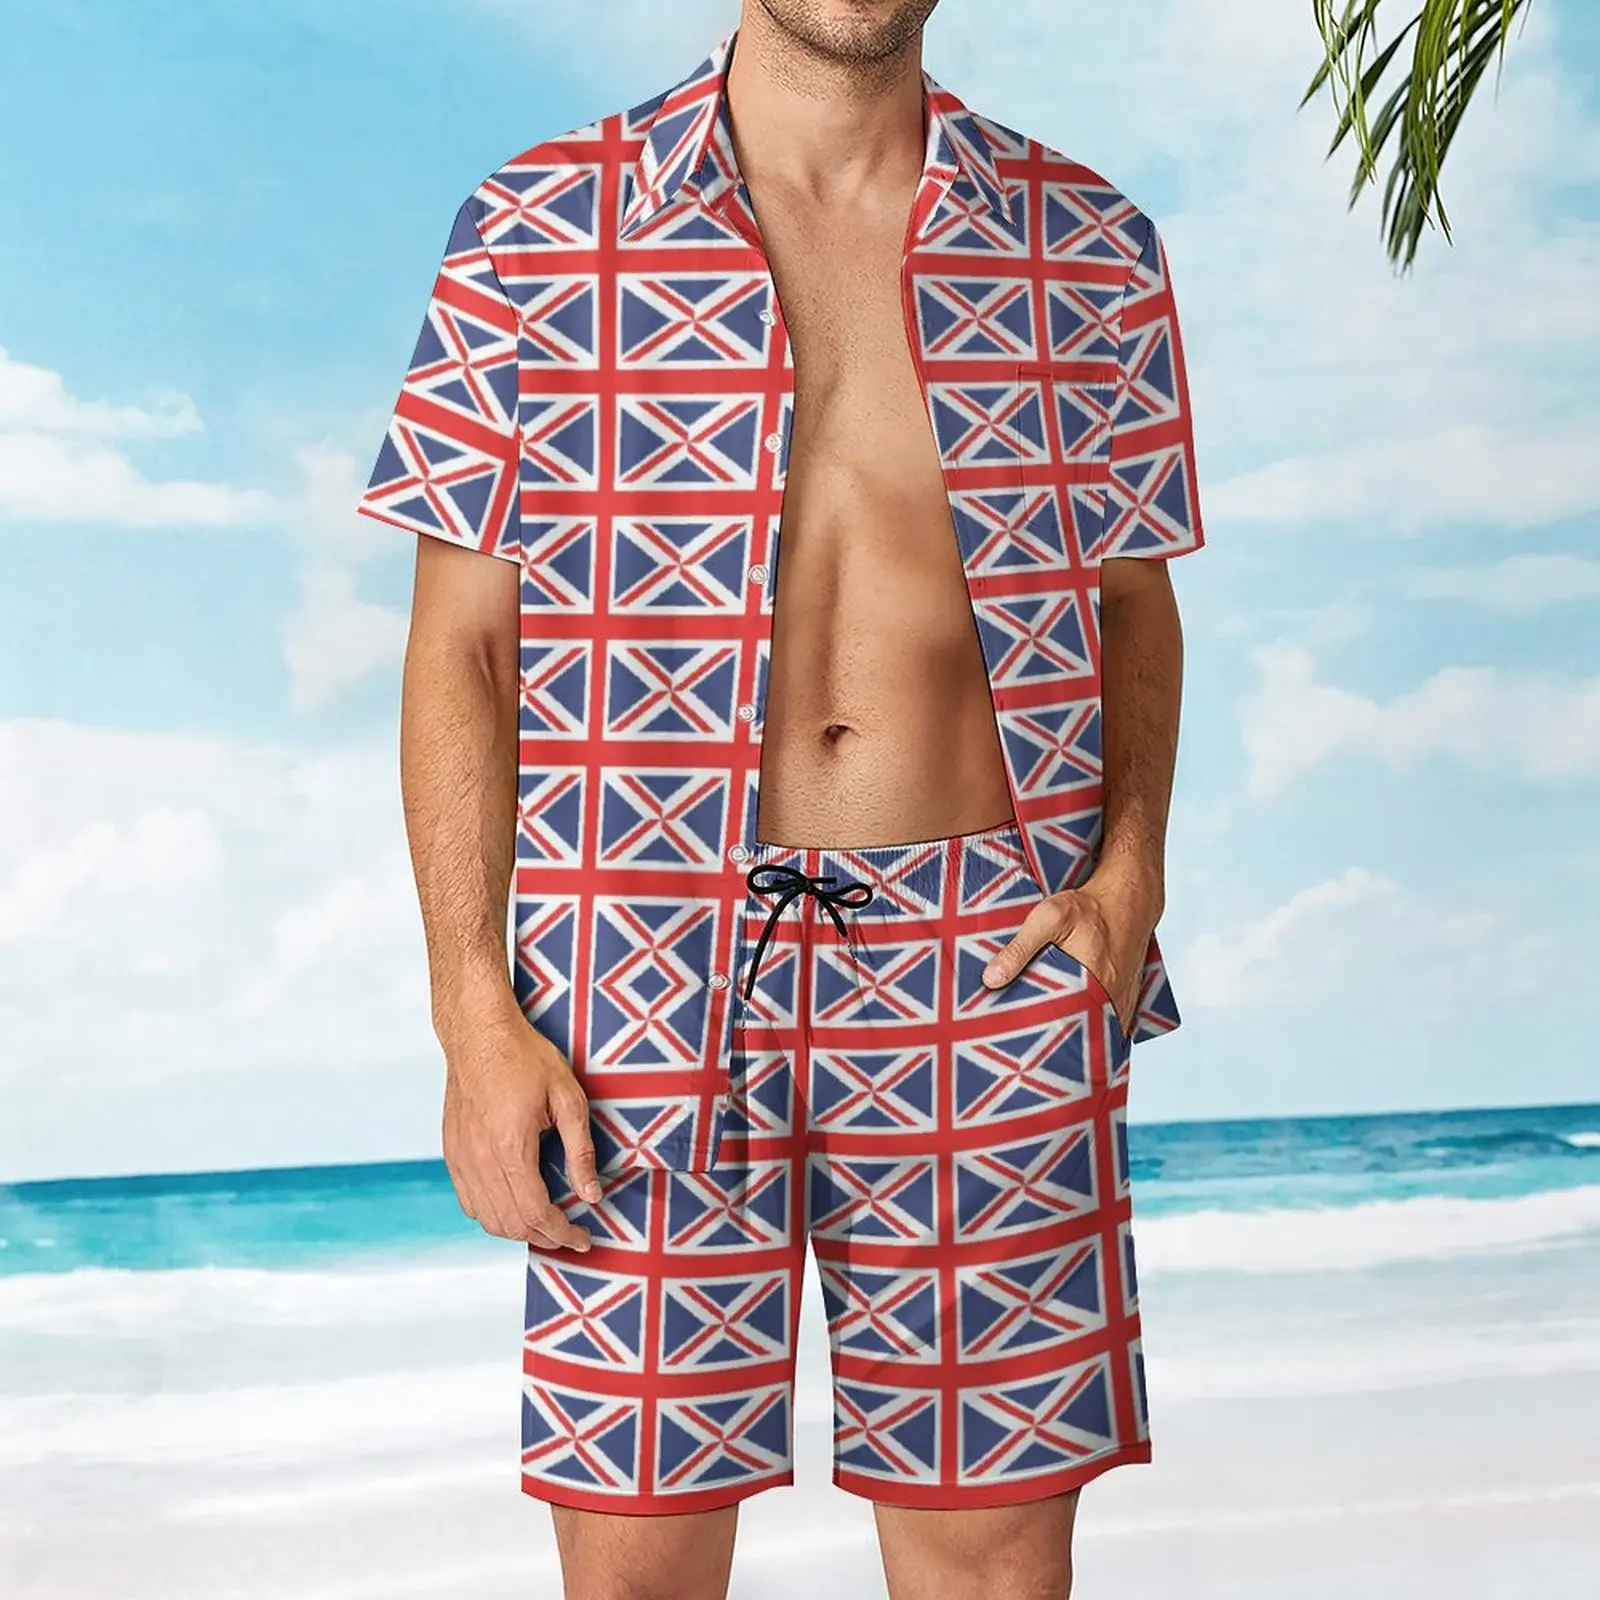 

Union Jack Flag of The United Kingdom. Tapestry Y Home Men's Beach Suit Unique 2 Pieces Coordinates top Quality